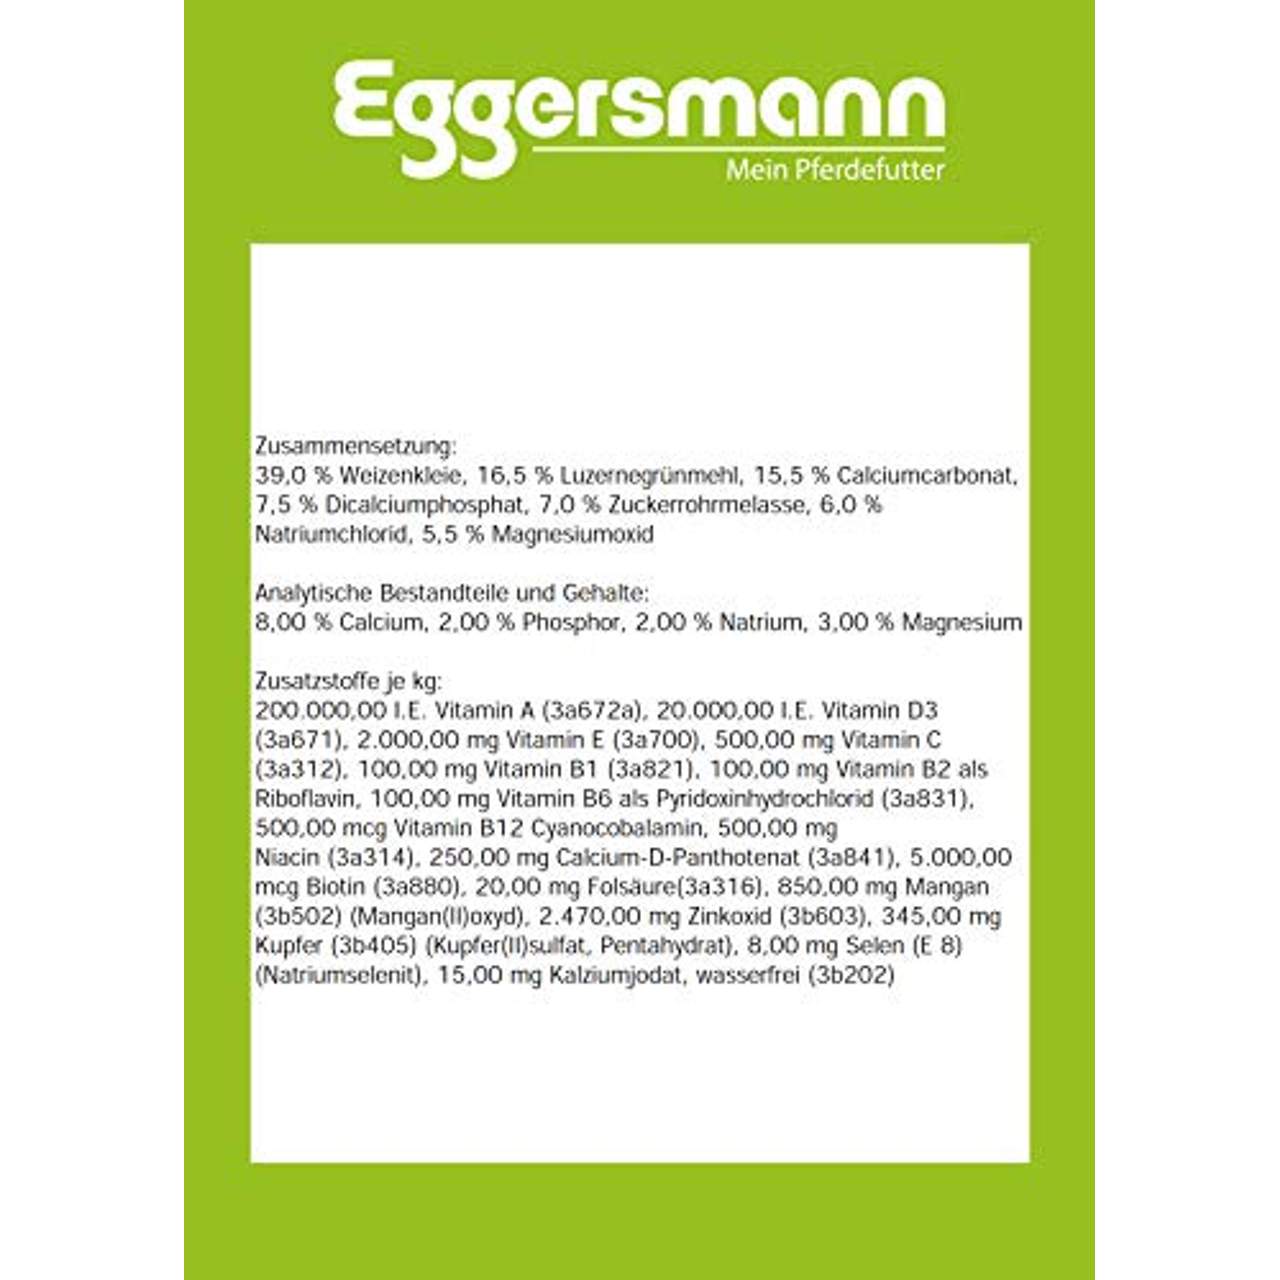 Eggersmann Mineral Bricks Mineralfuttermittel